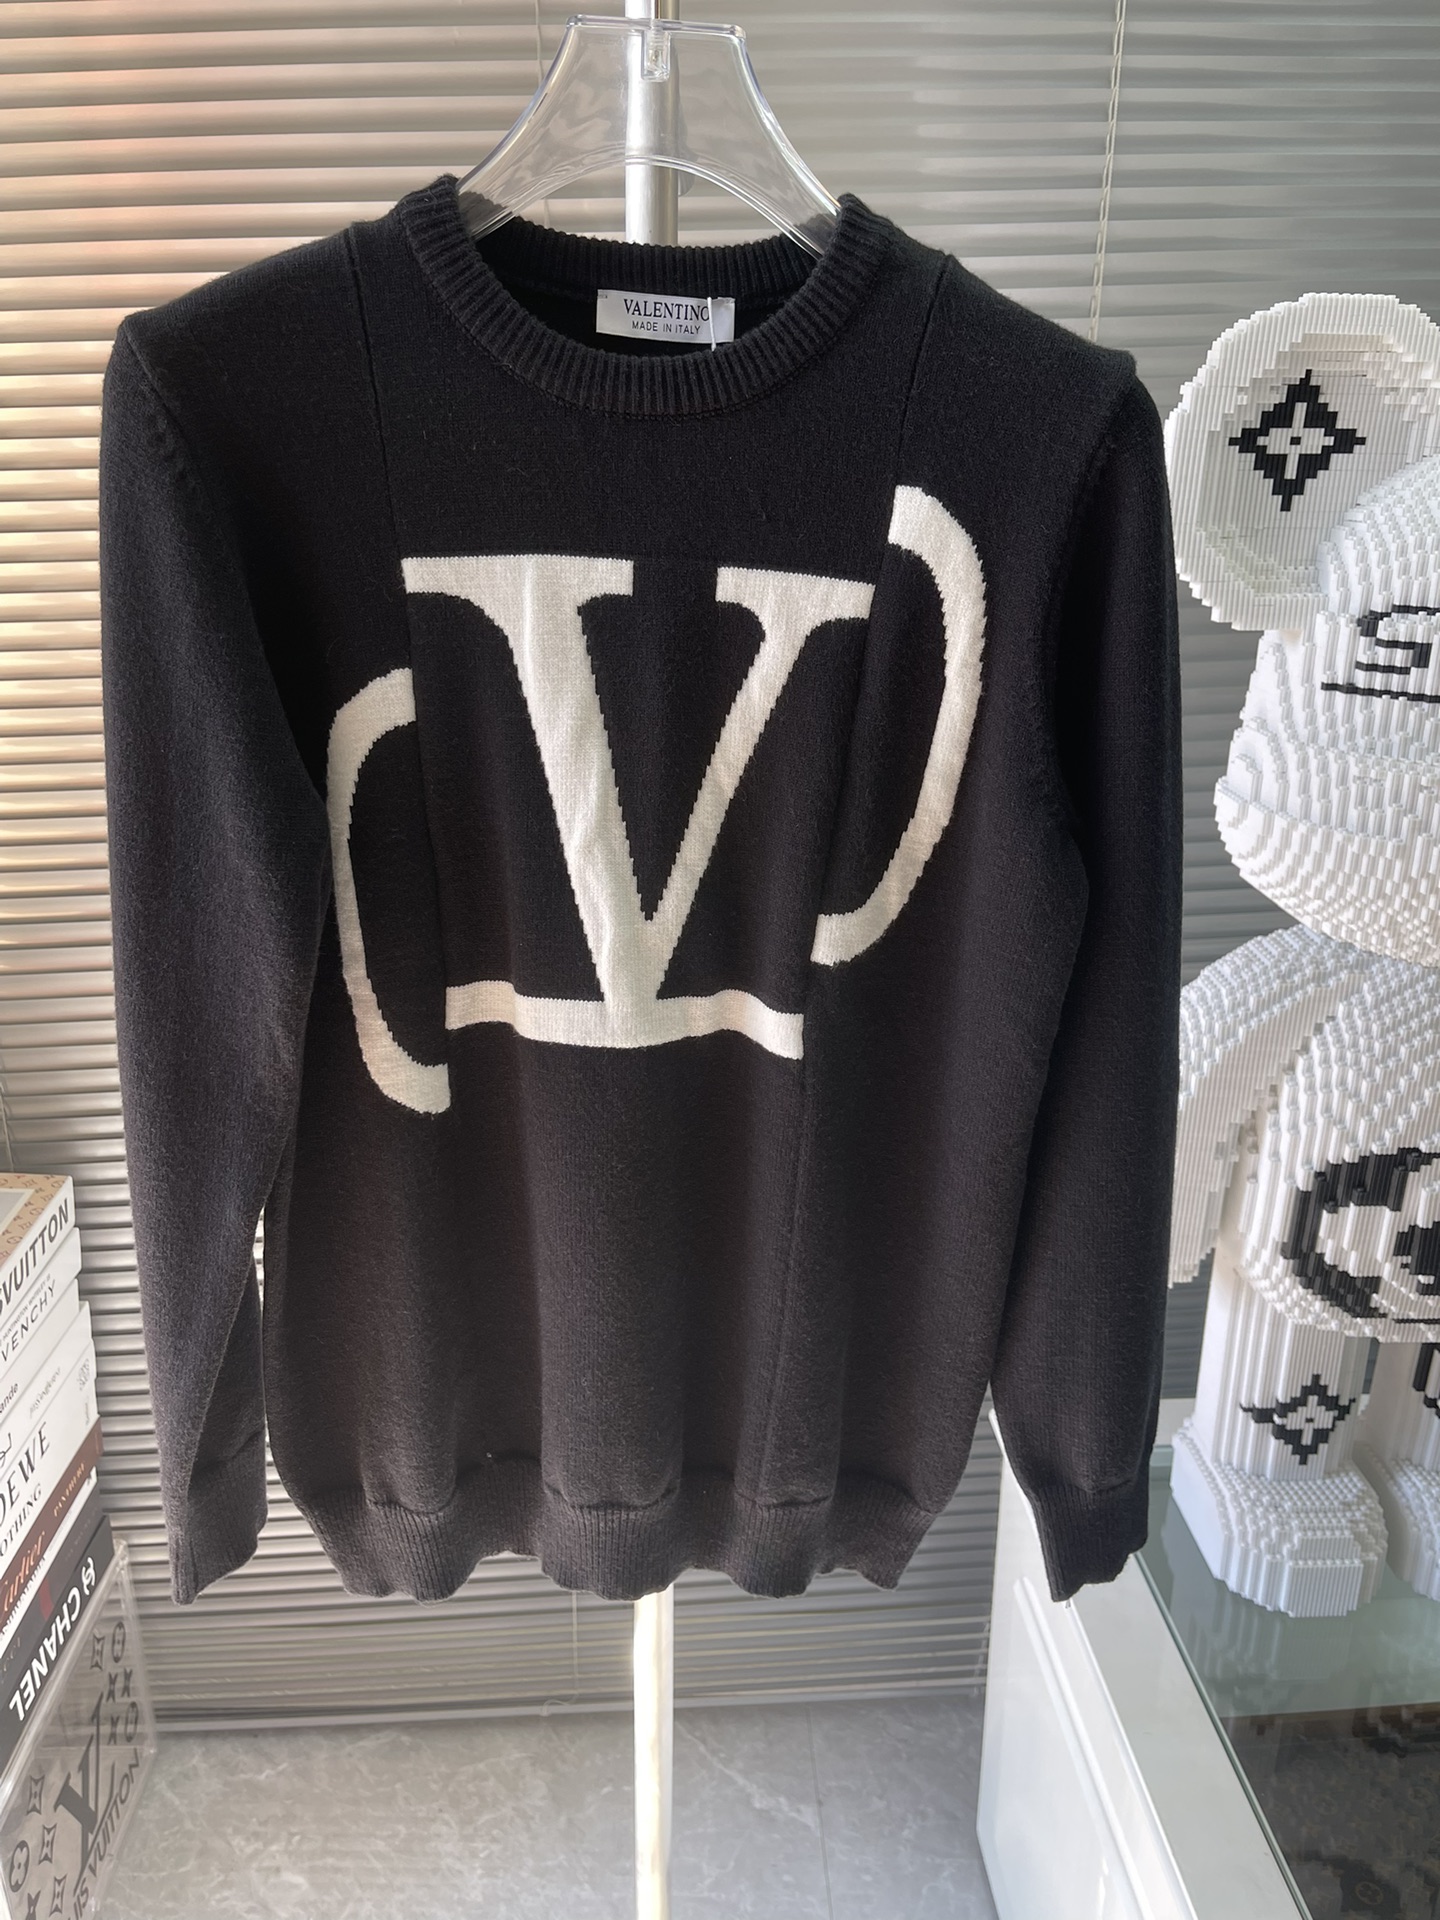 valentino メンズ ヴァレンティノ セーター偽物 HOT品質保証 トップス セーター 柔らかい 保温 暖かい ブラック_1